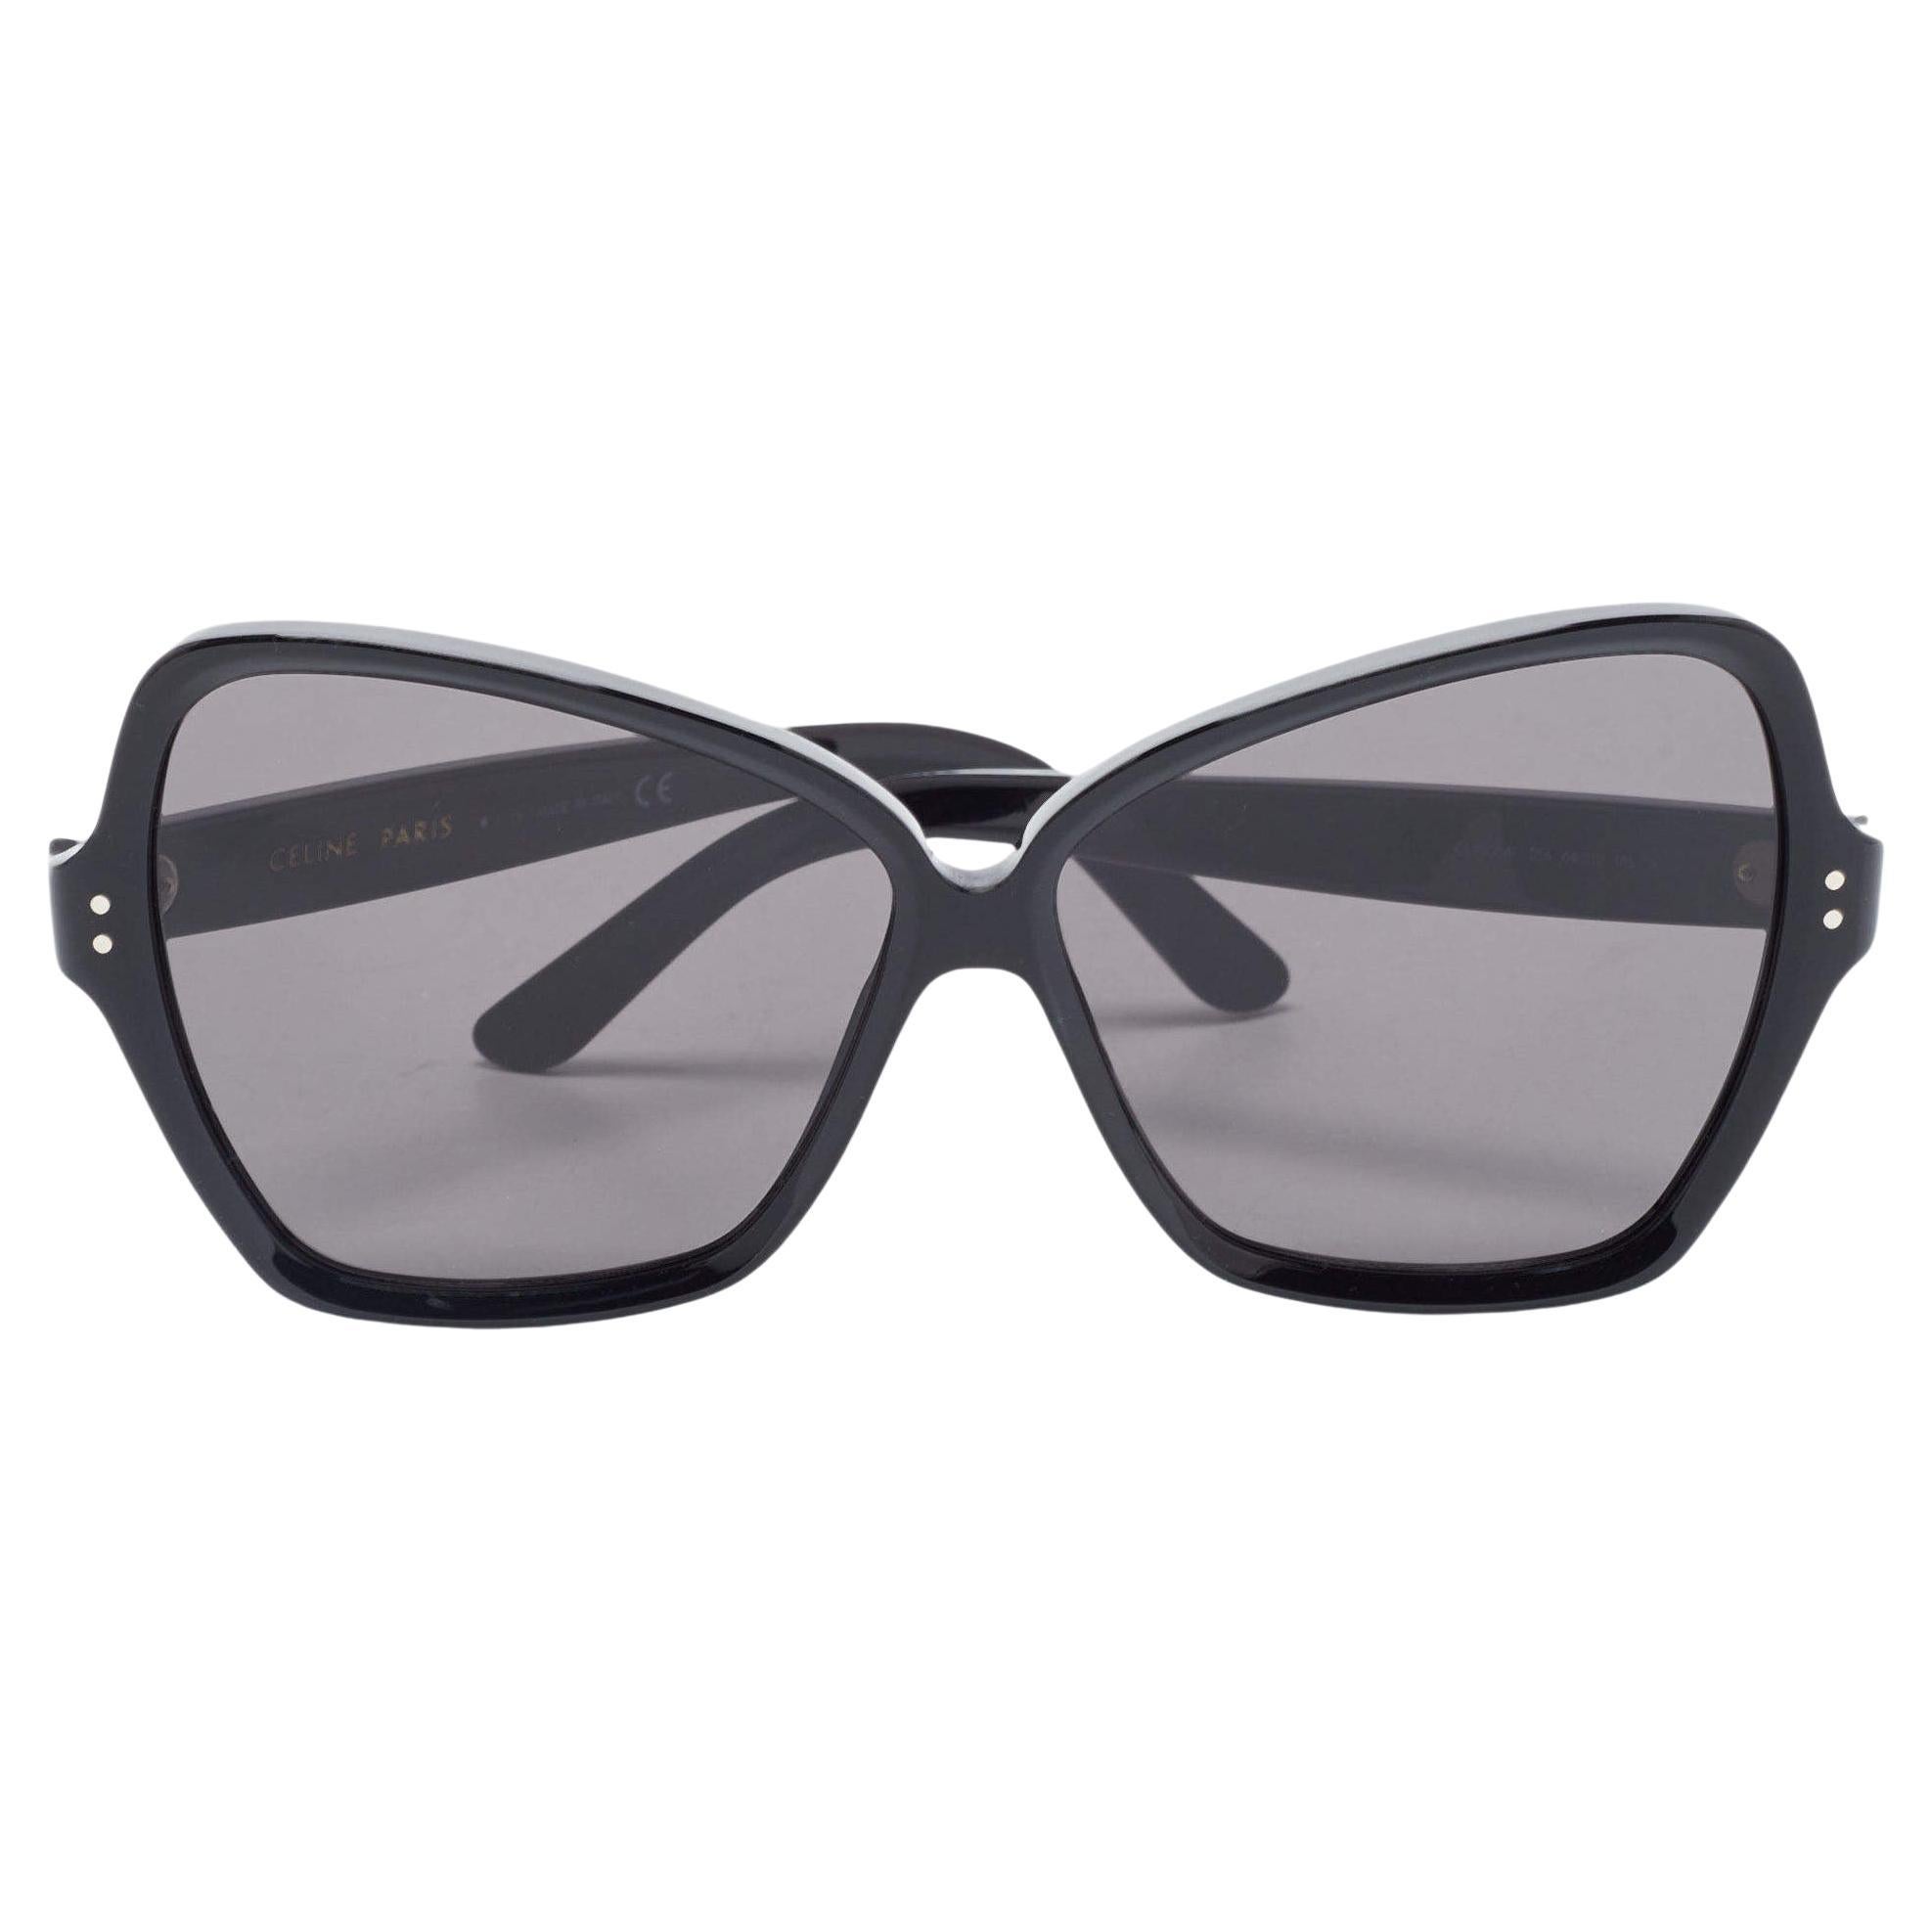 Celine Black Gradient Butterfly Sunglasses